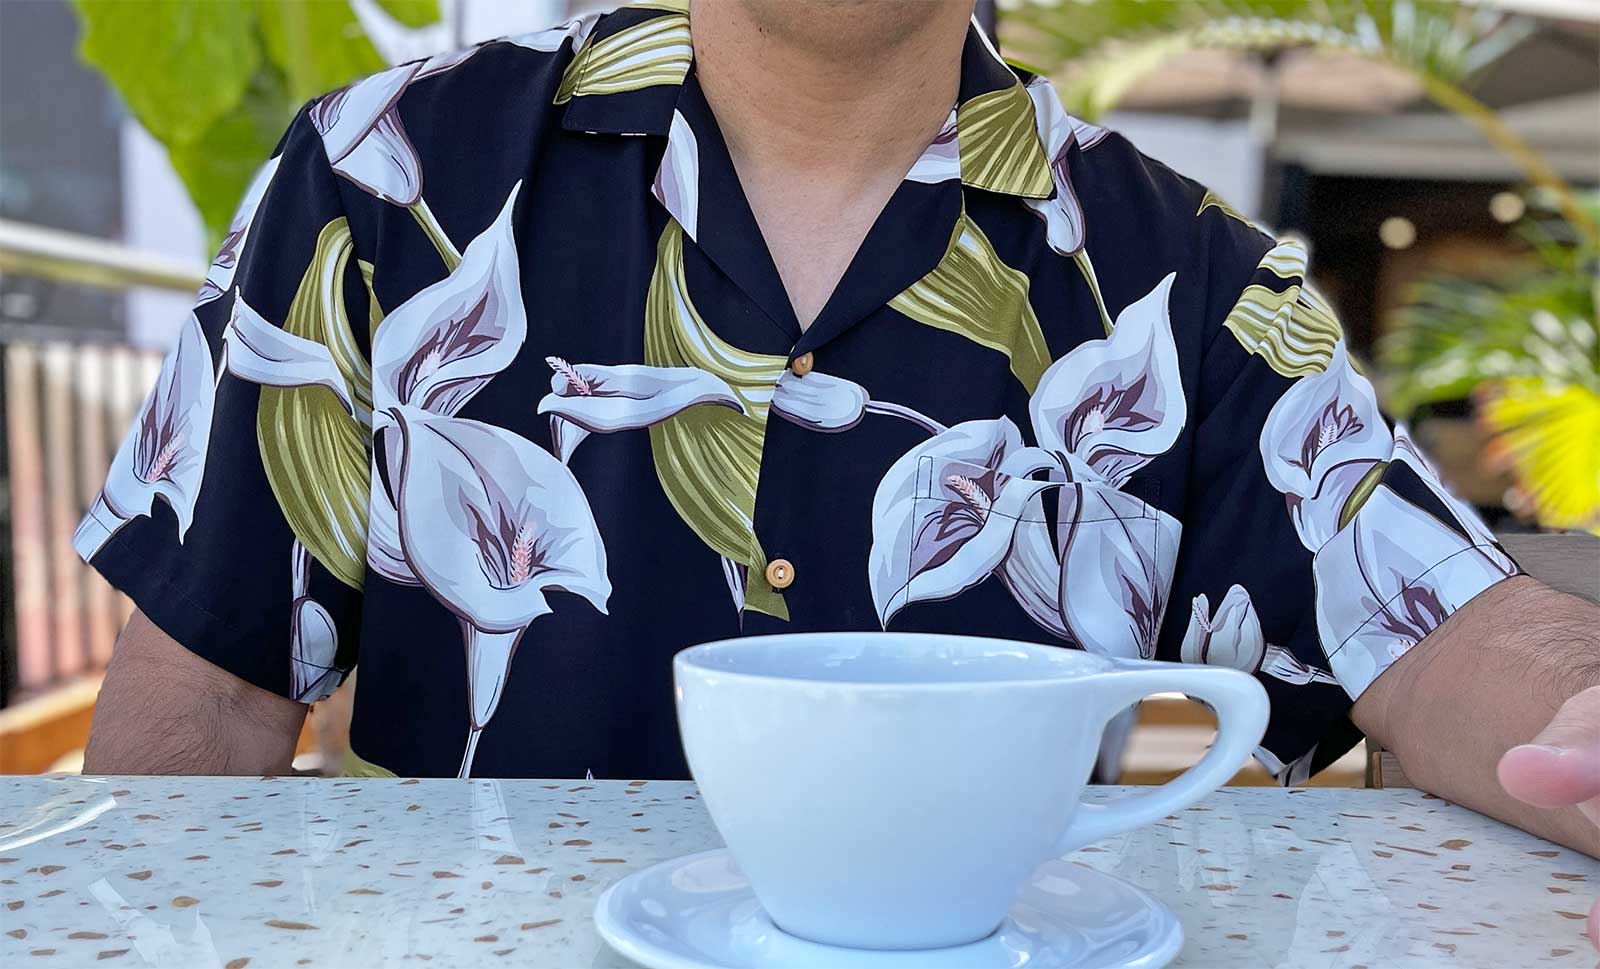 Magnum, P.I.: The Purple Calla Lily Aloha Shirt » BAMF Style